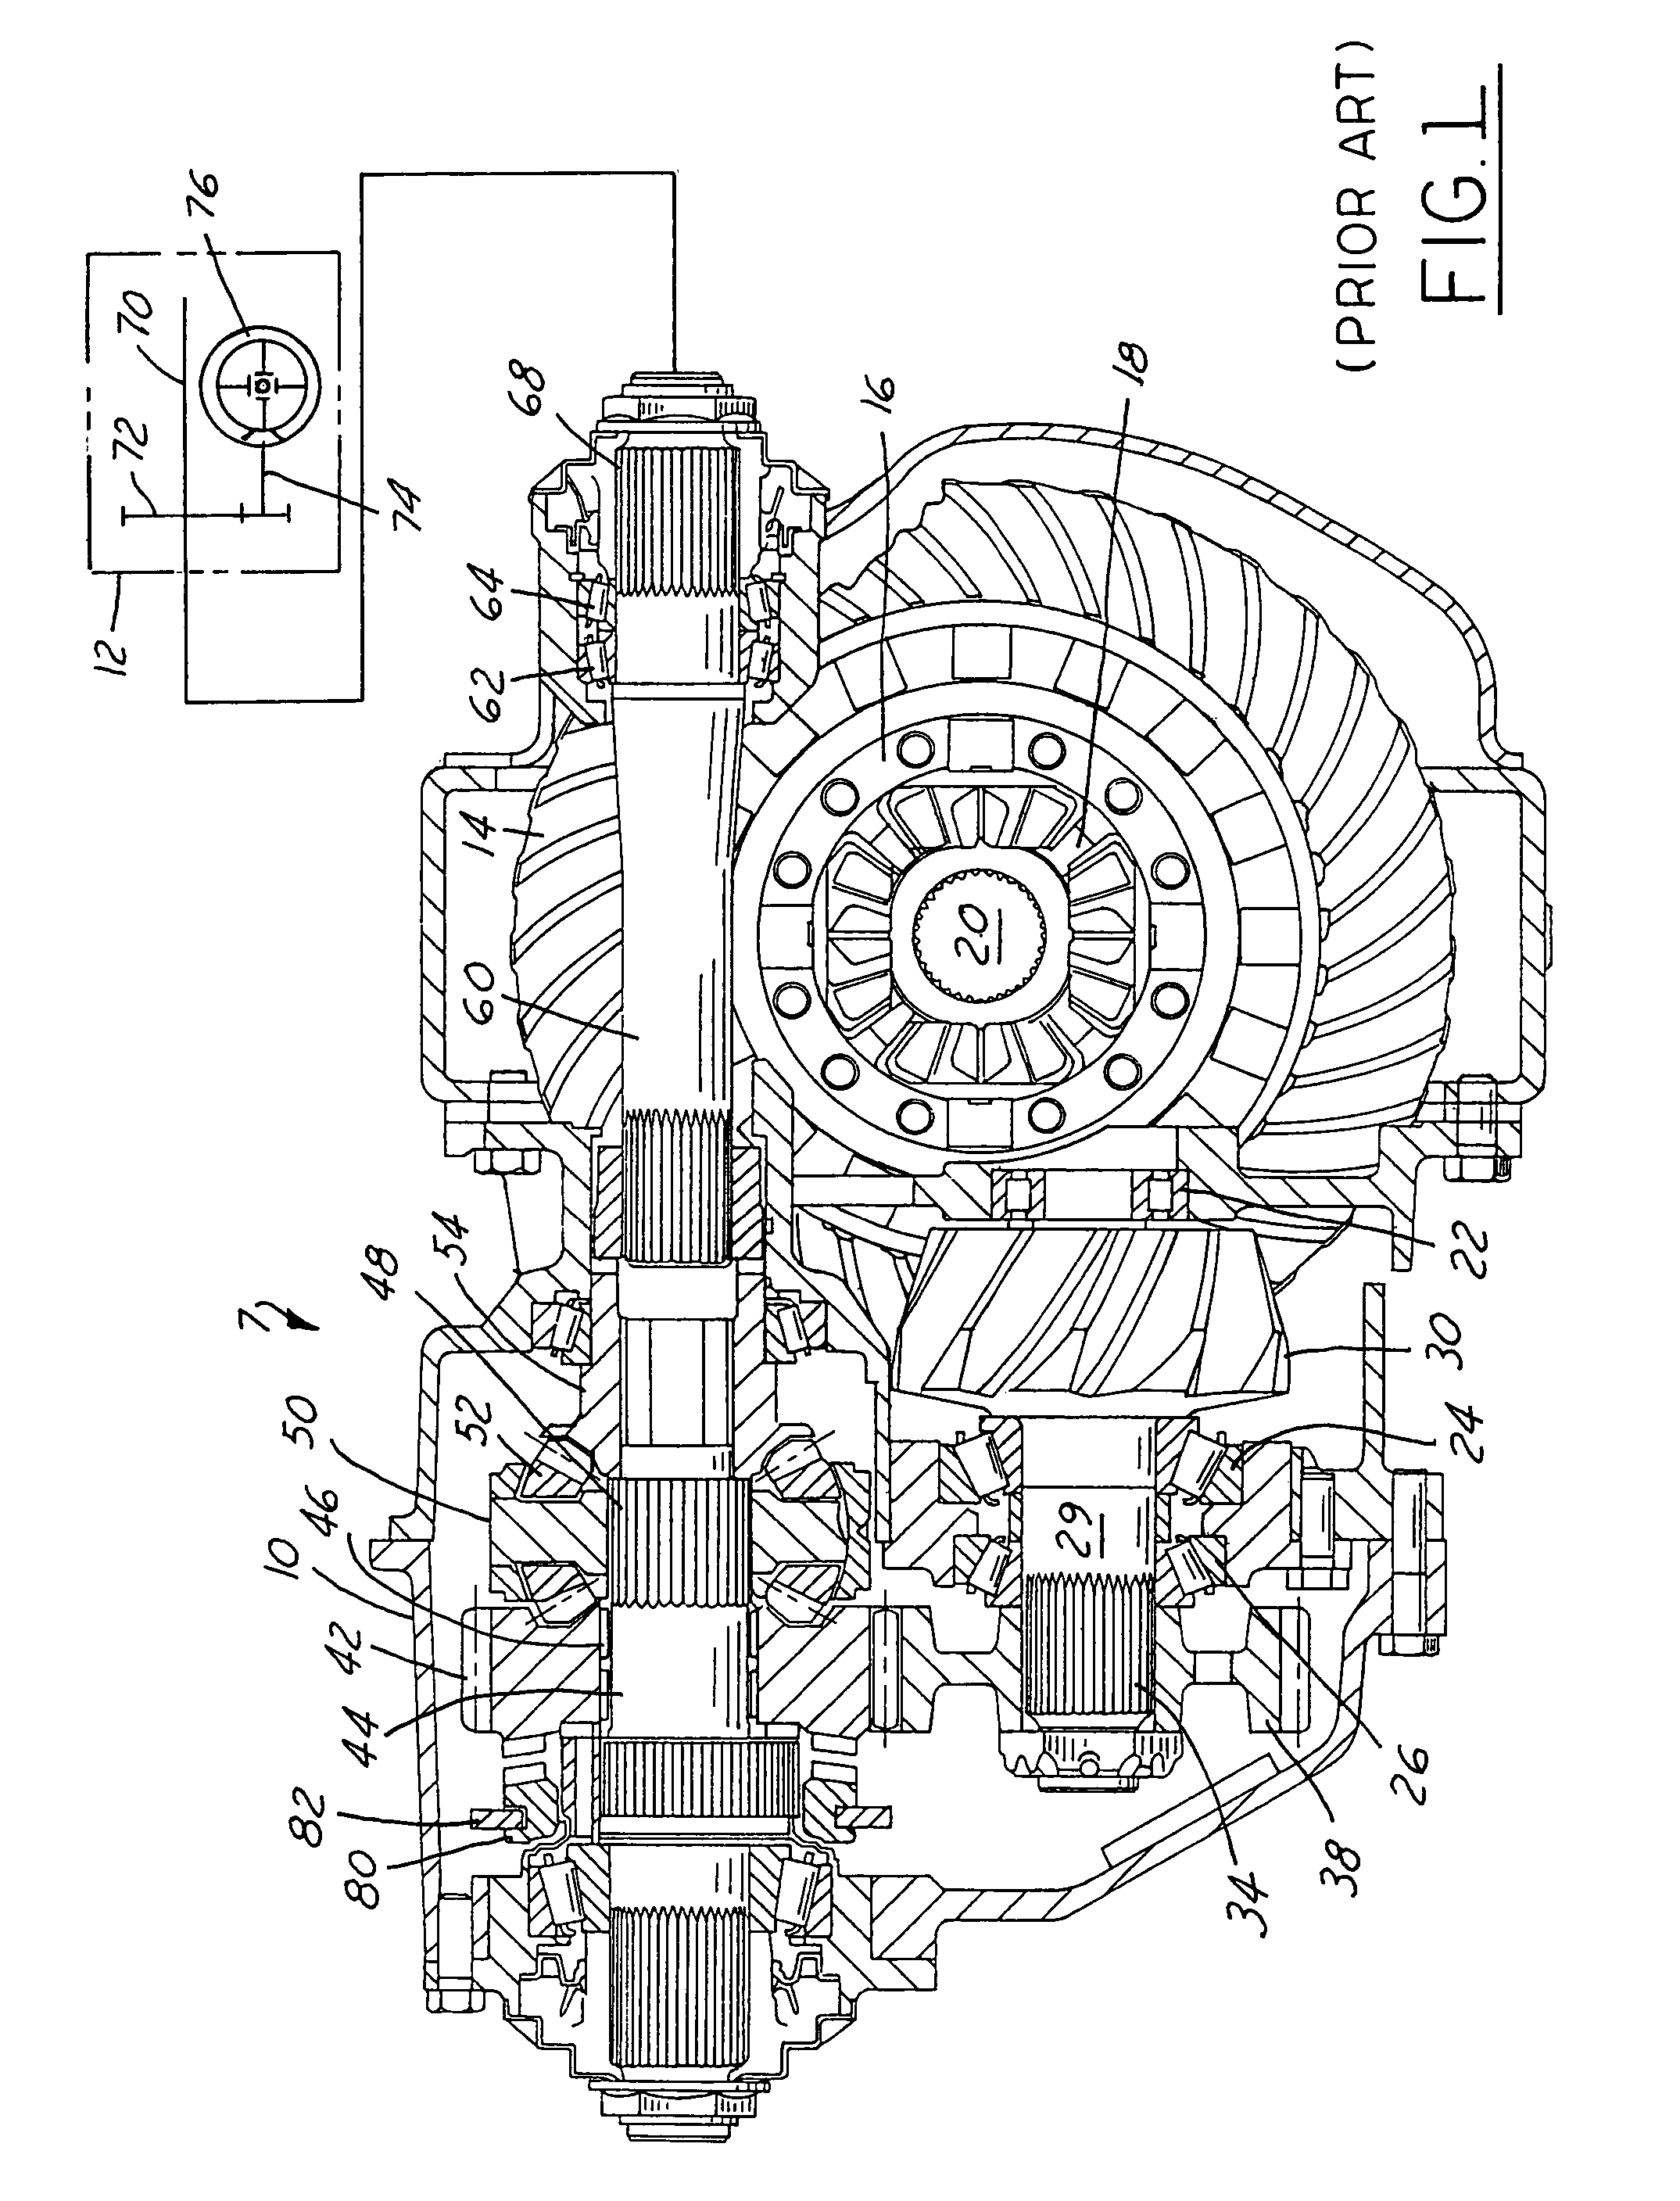 Inter-axle differential lock shift mechanism